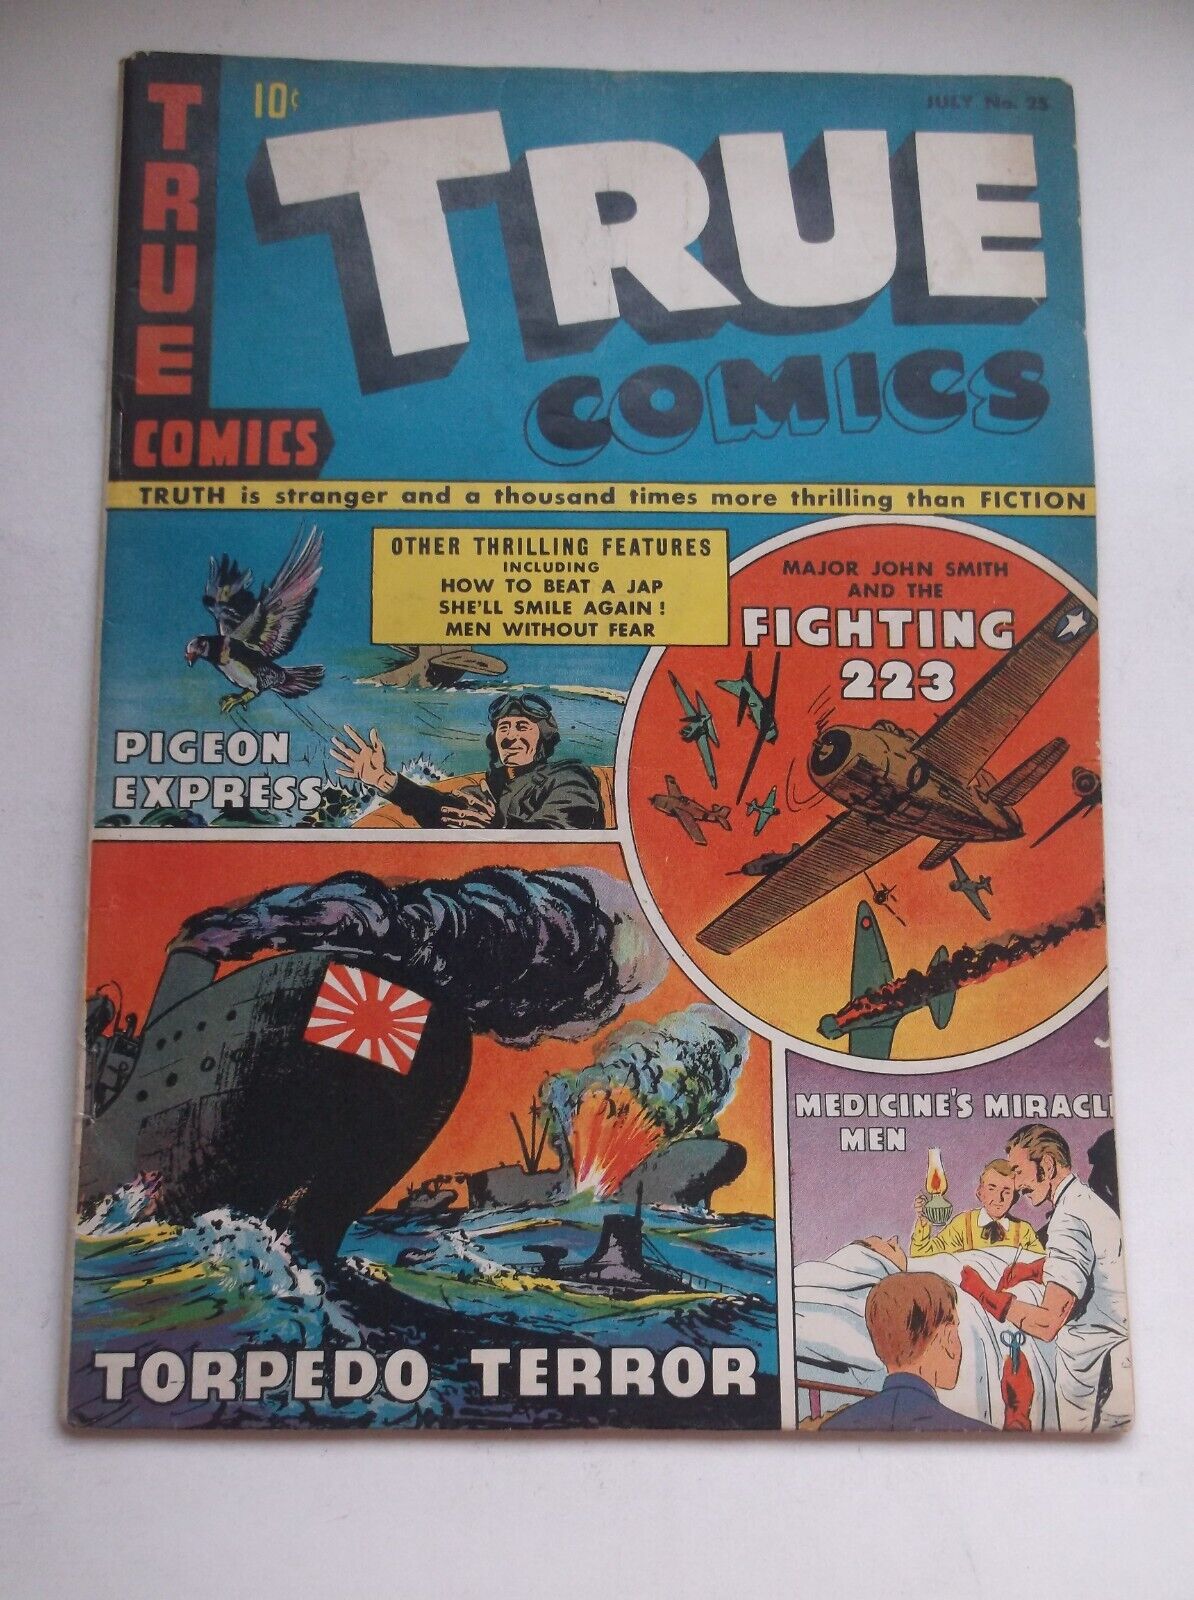 PARENT\'S MAGAZINE PRESS: TRUE COMICS #25, HTF/VINTAGE HISTORICAL GA, 1943, FN